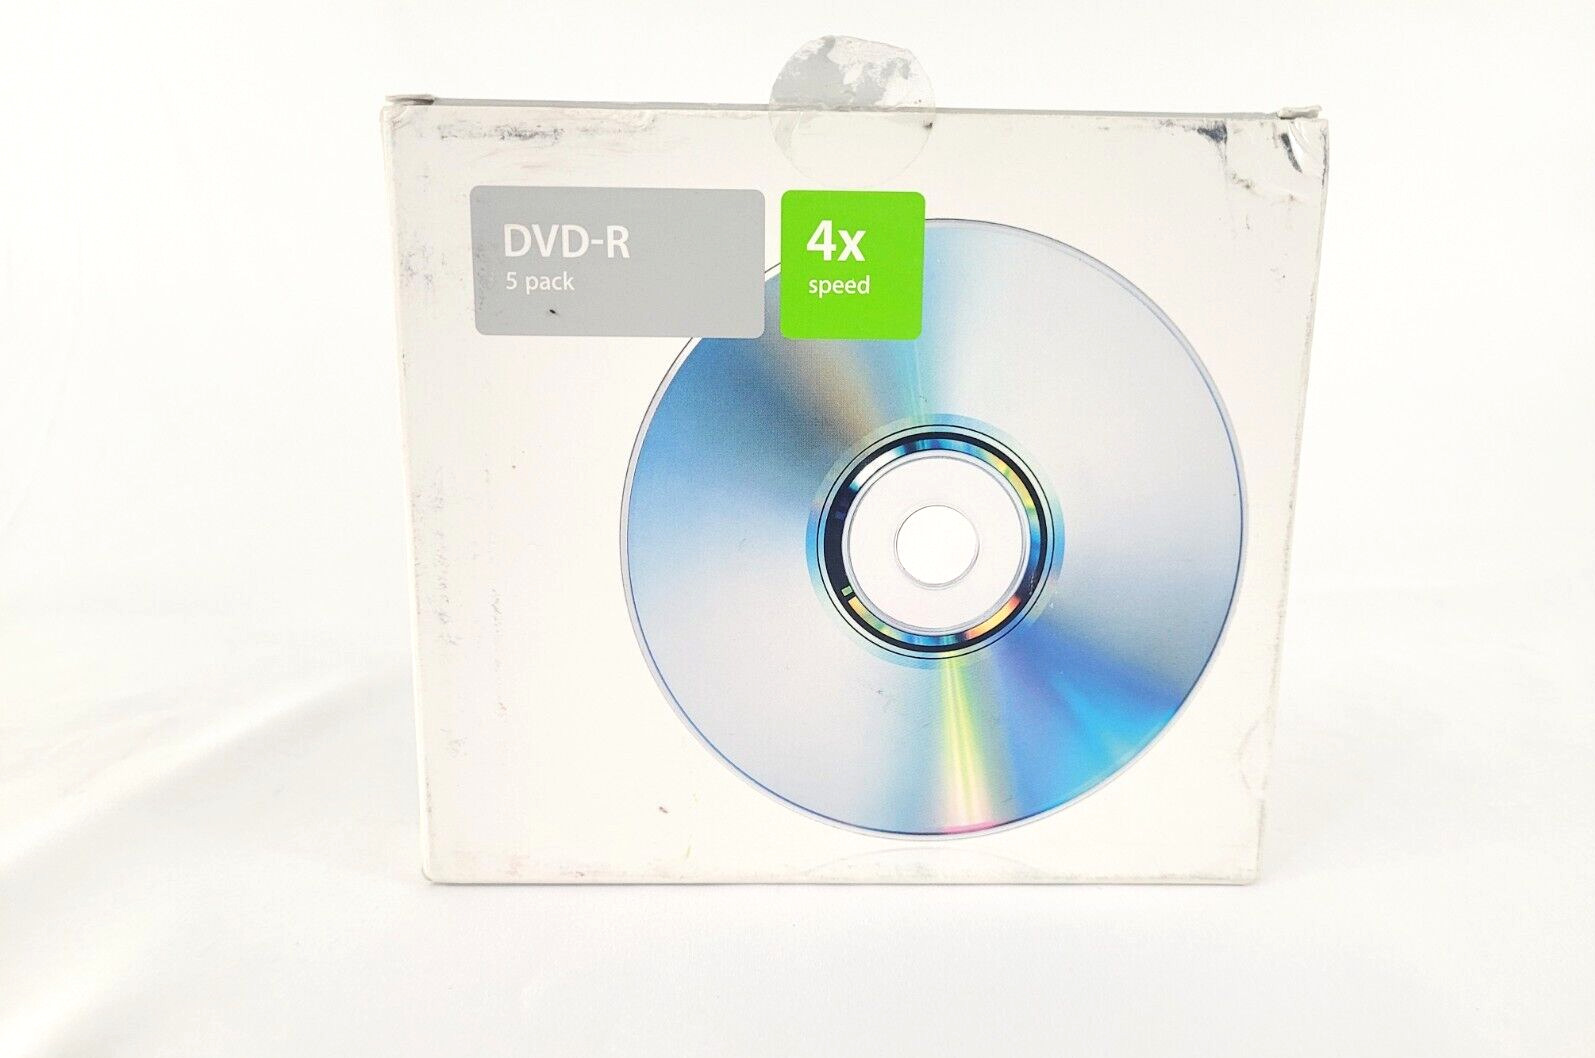 Apple DVD-R 4X Blank Media  DVD-R  M8985G/A  5 Pack- New Open Box